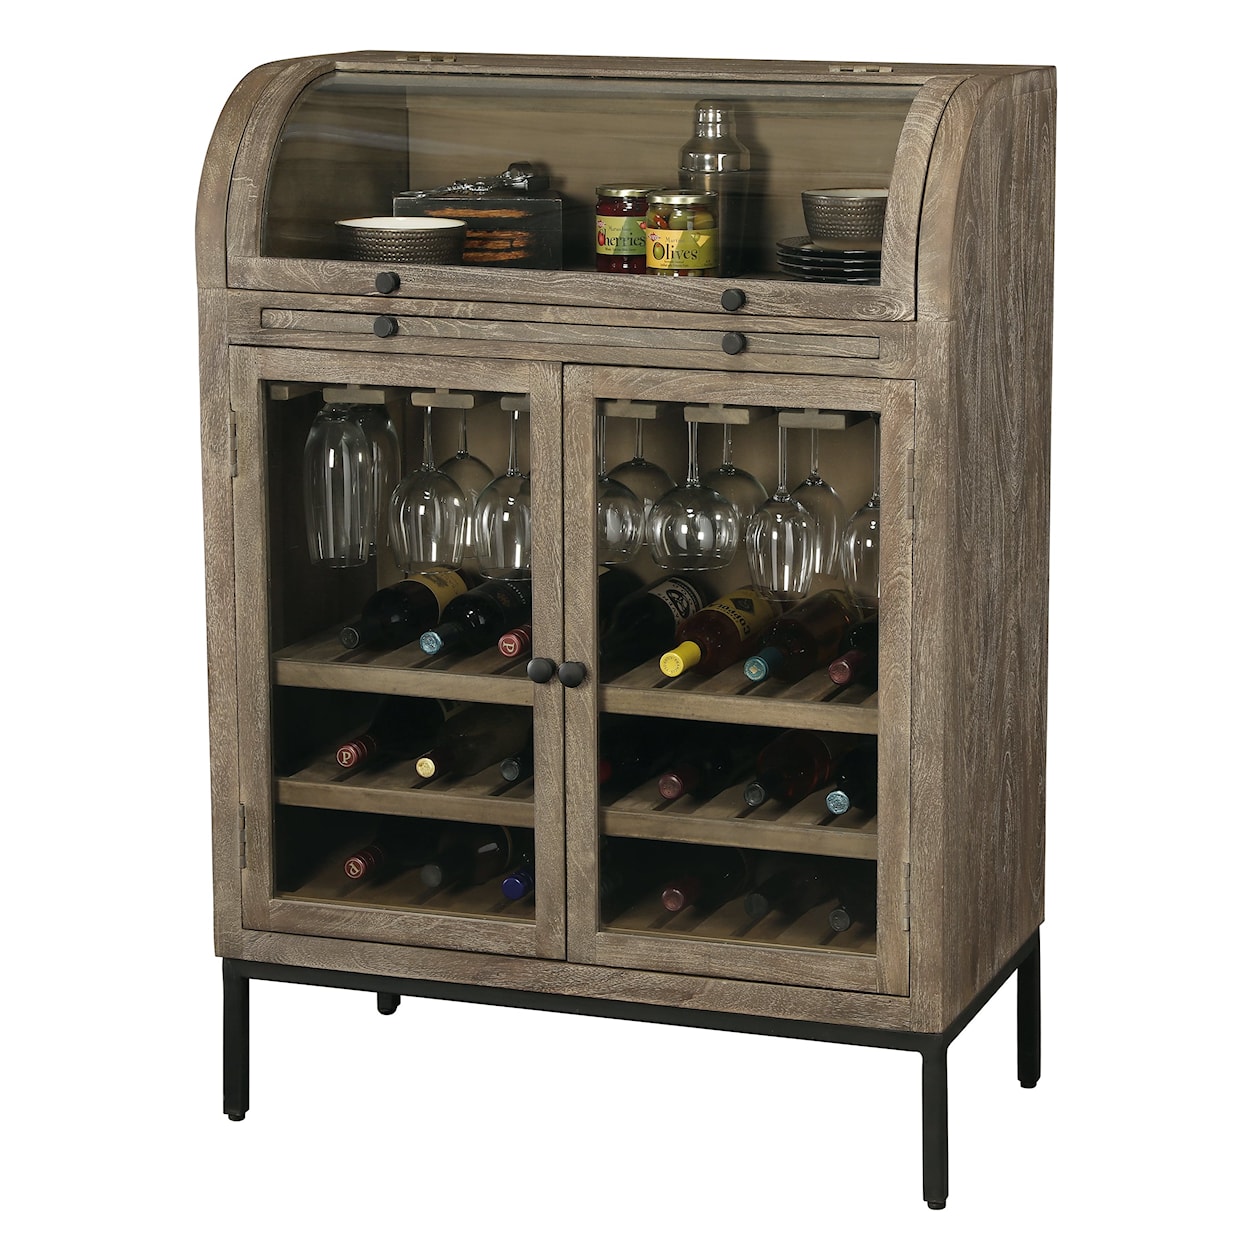 Howard Miller Howard Miller Paloma Wine & Bar Cabinet